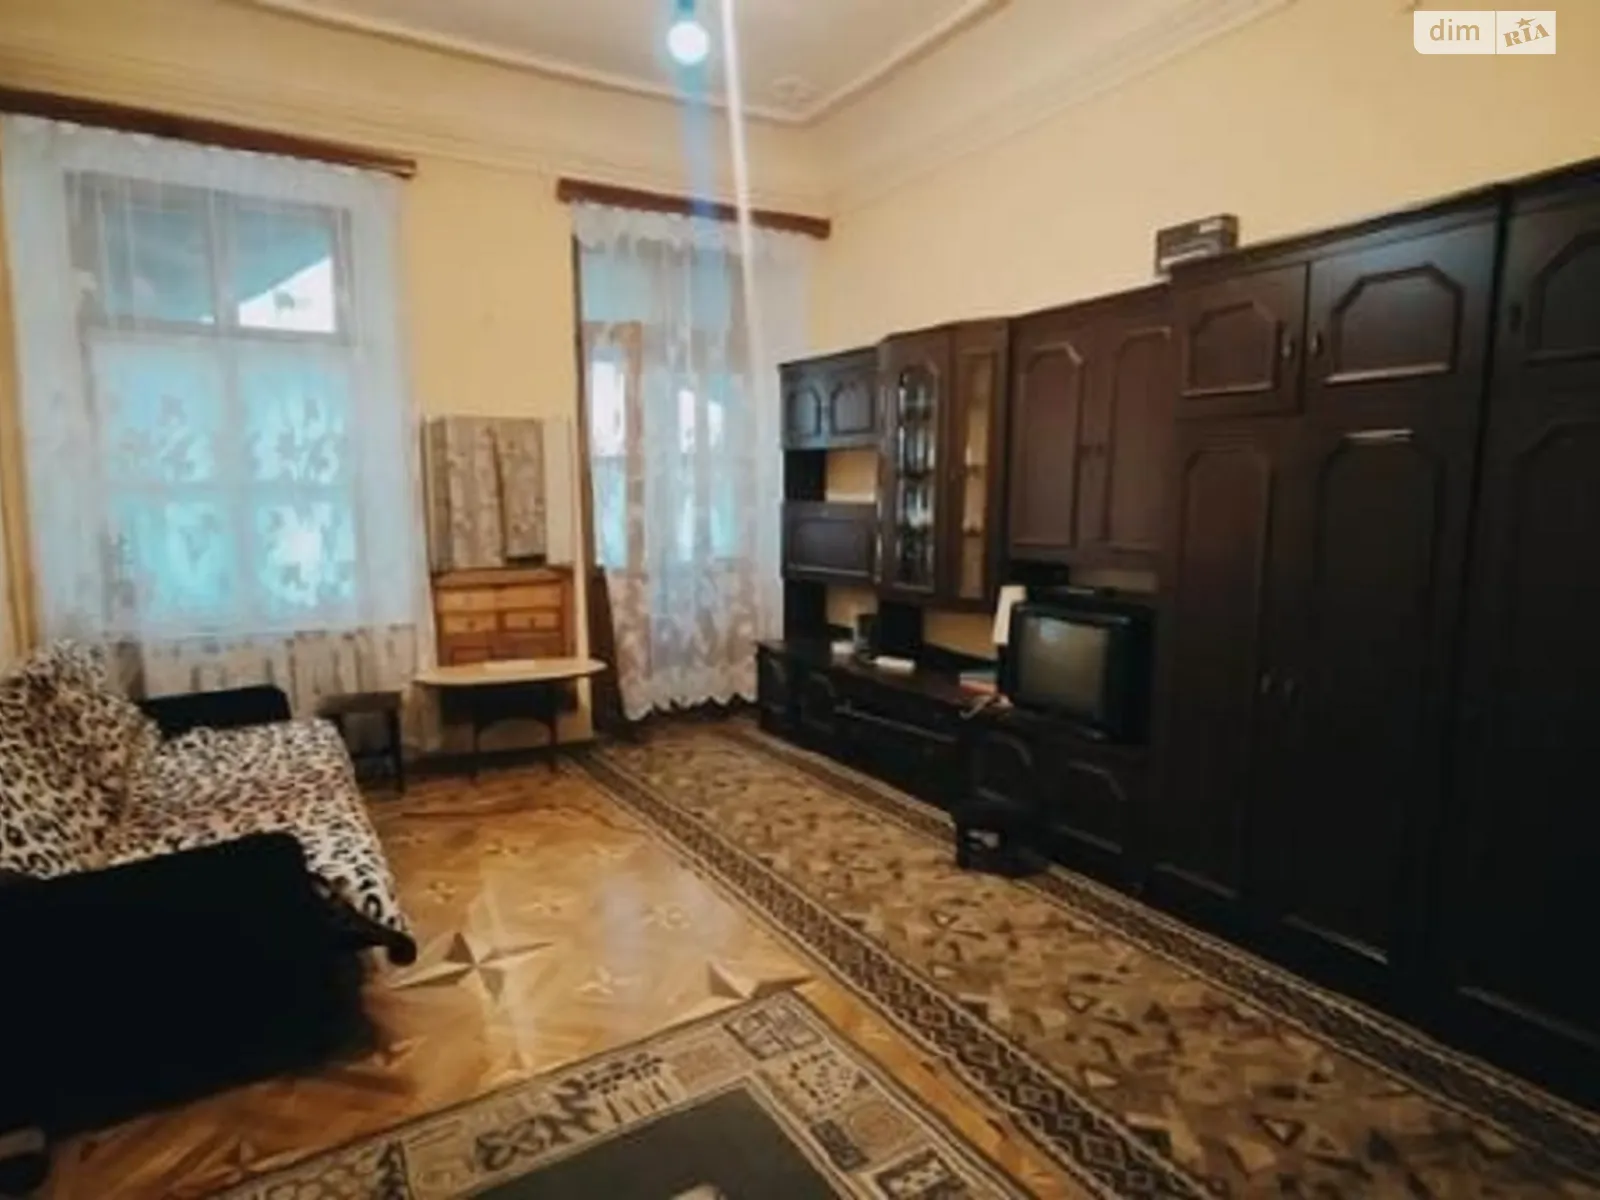 Продается комната 56 кв. м в Одессе, цена: 27000 $ - фото 1